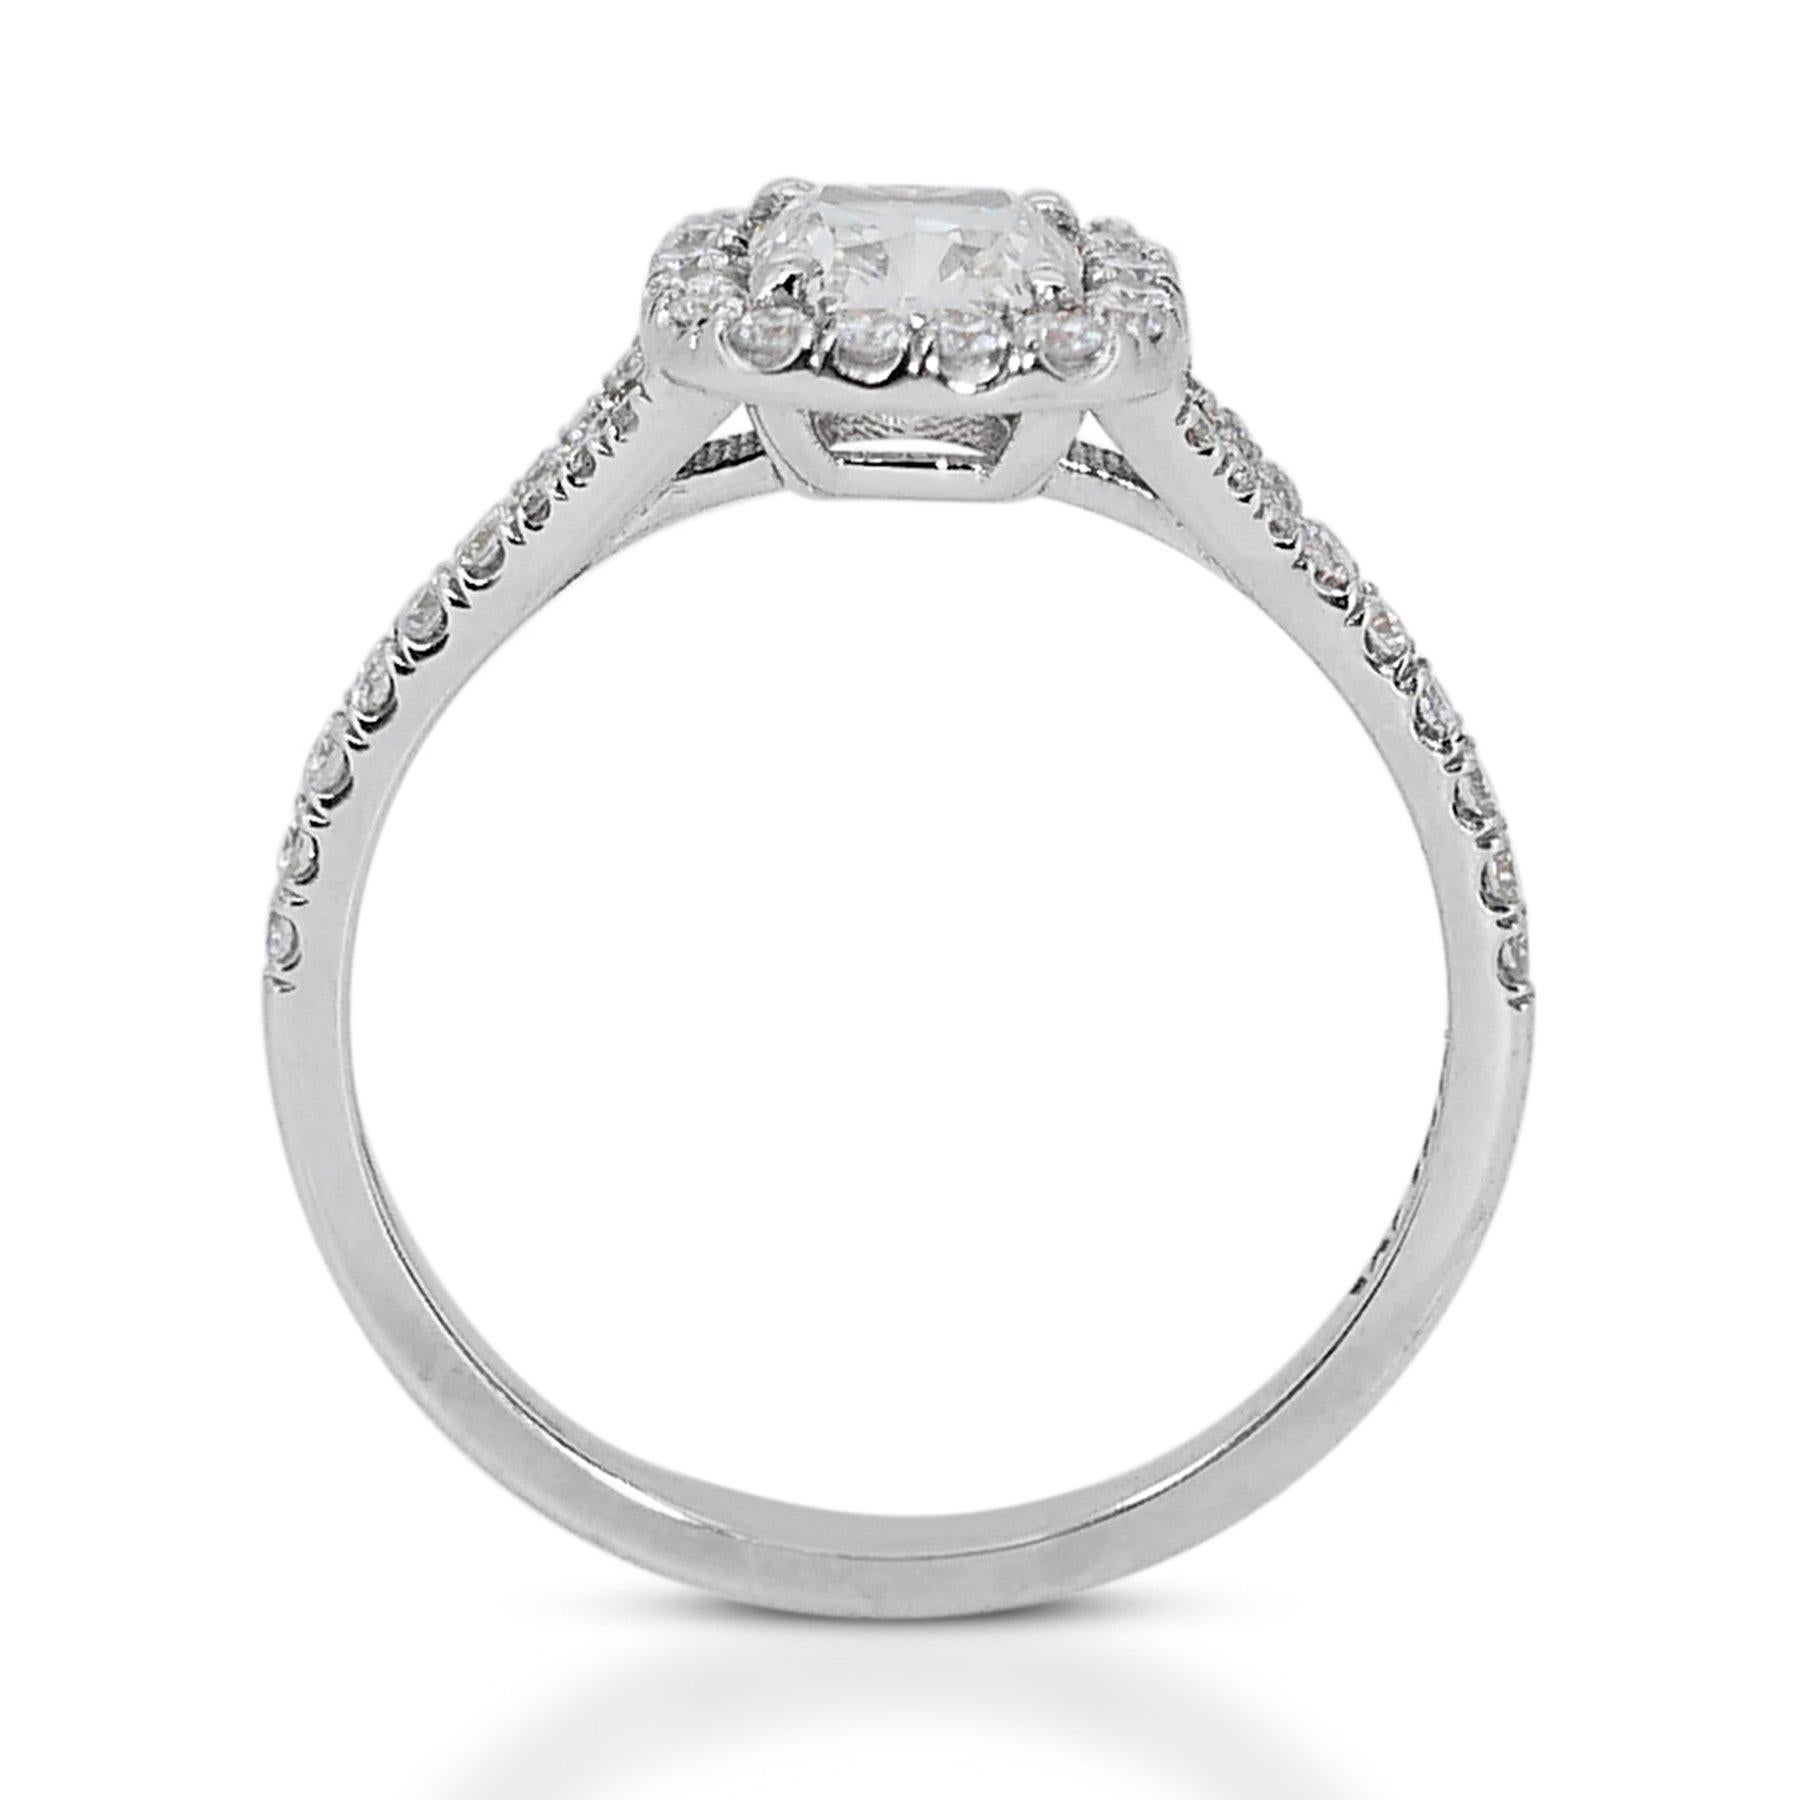 Cushion Cut Elegant 1.40ct Cushion-Cut Diamond Halo Ring in 18k White Gold - GIA Certified For Sale